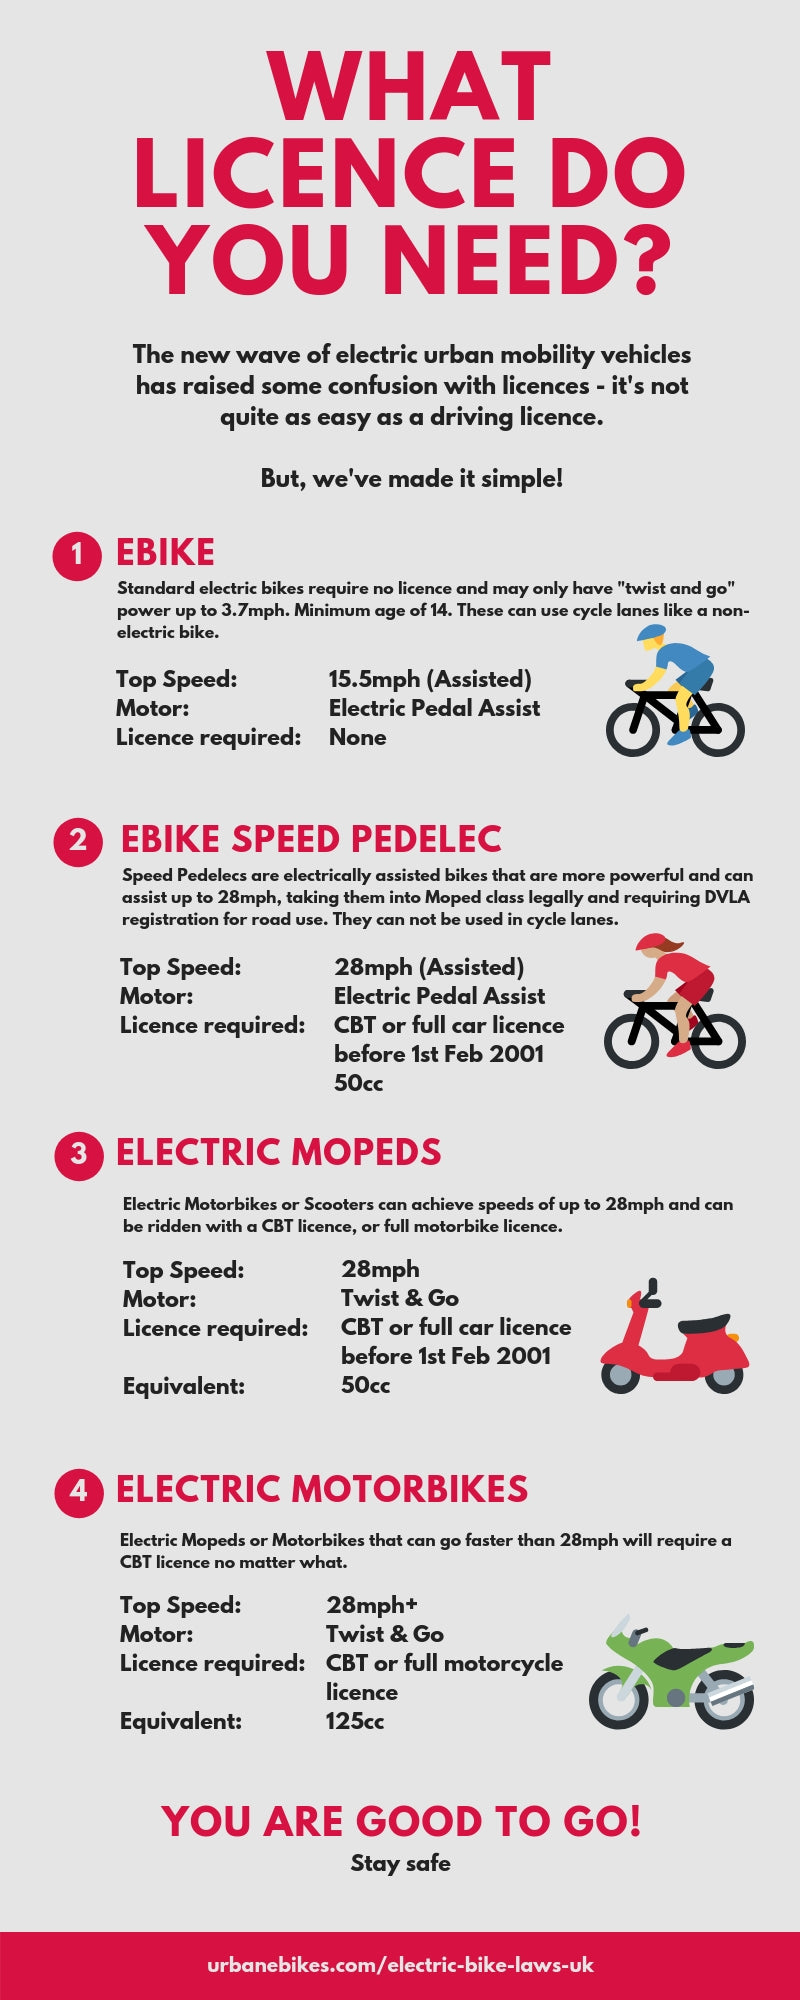 Electric Bike & Laws UK - Legal 30mph Bikes – eBikes